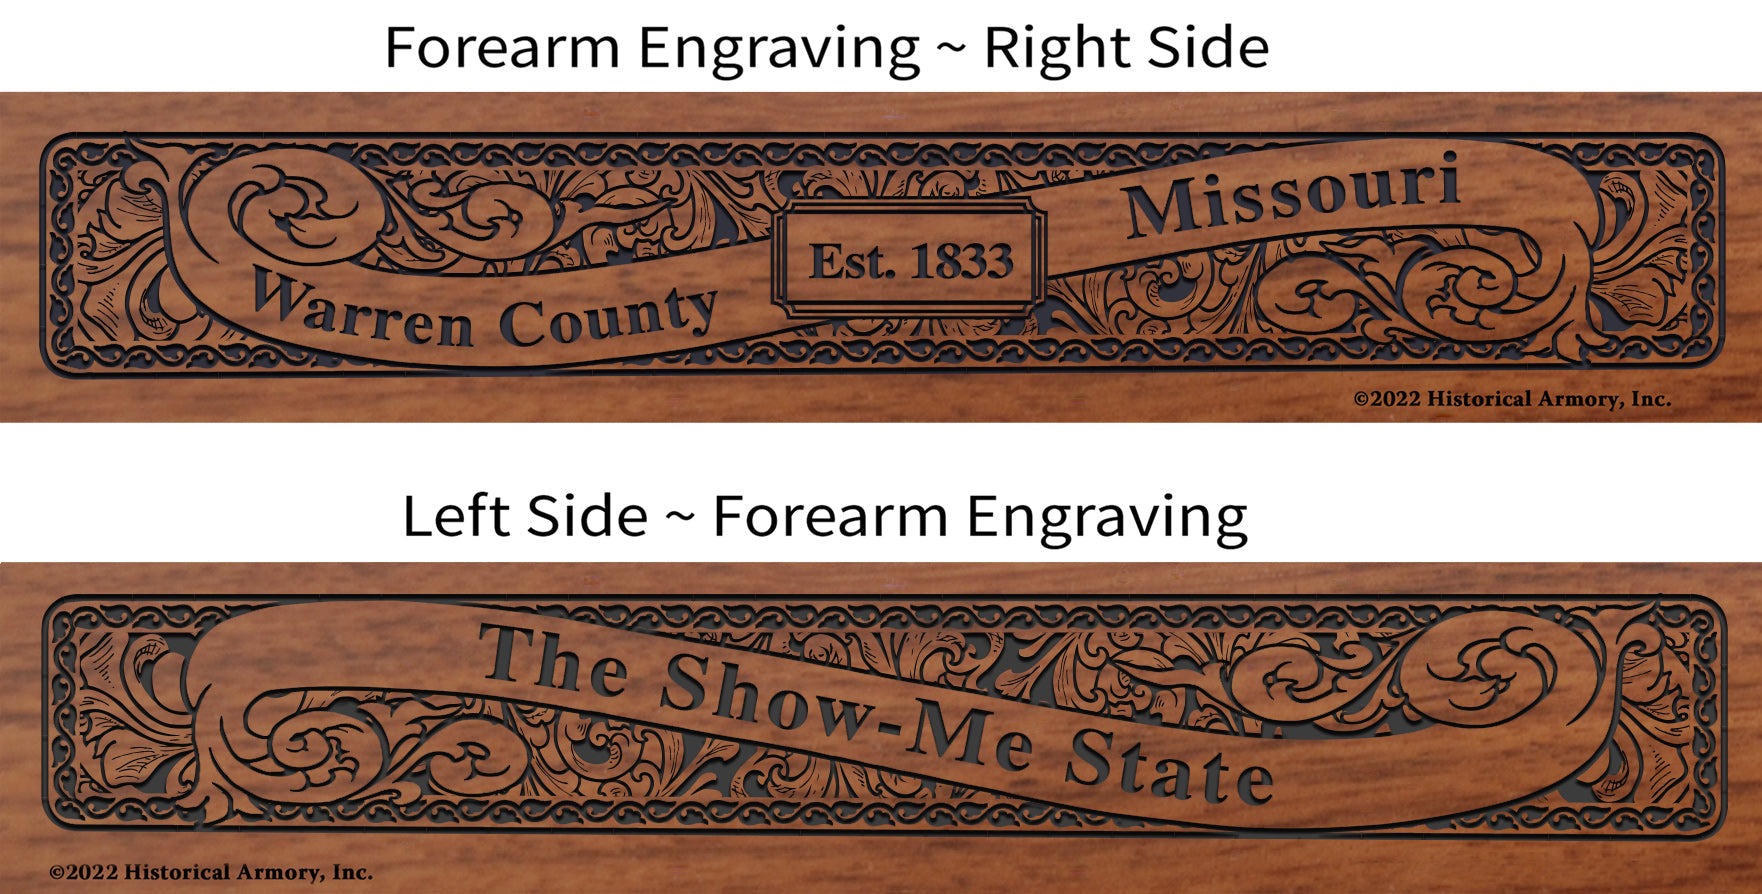 Warren County Missouri Engraved Rifle Forearm